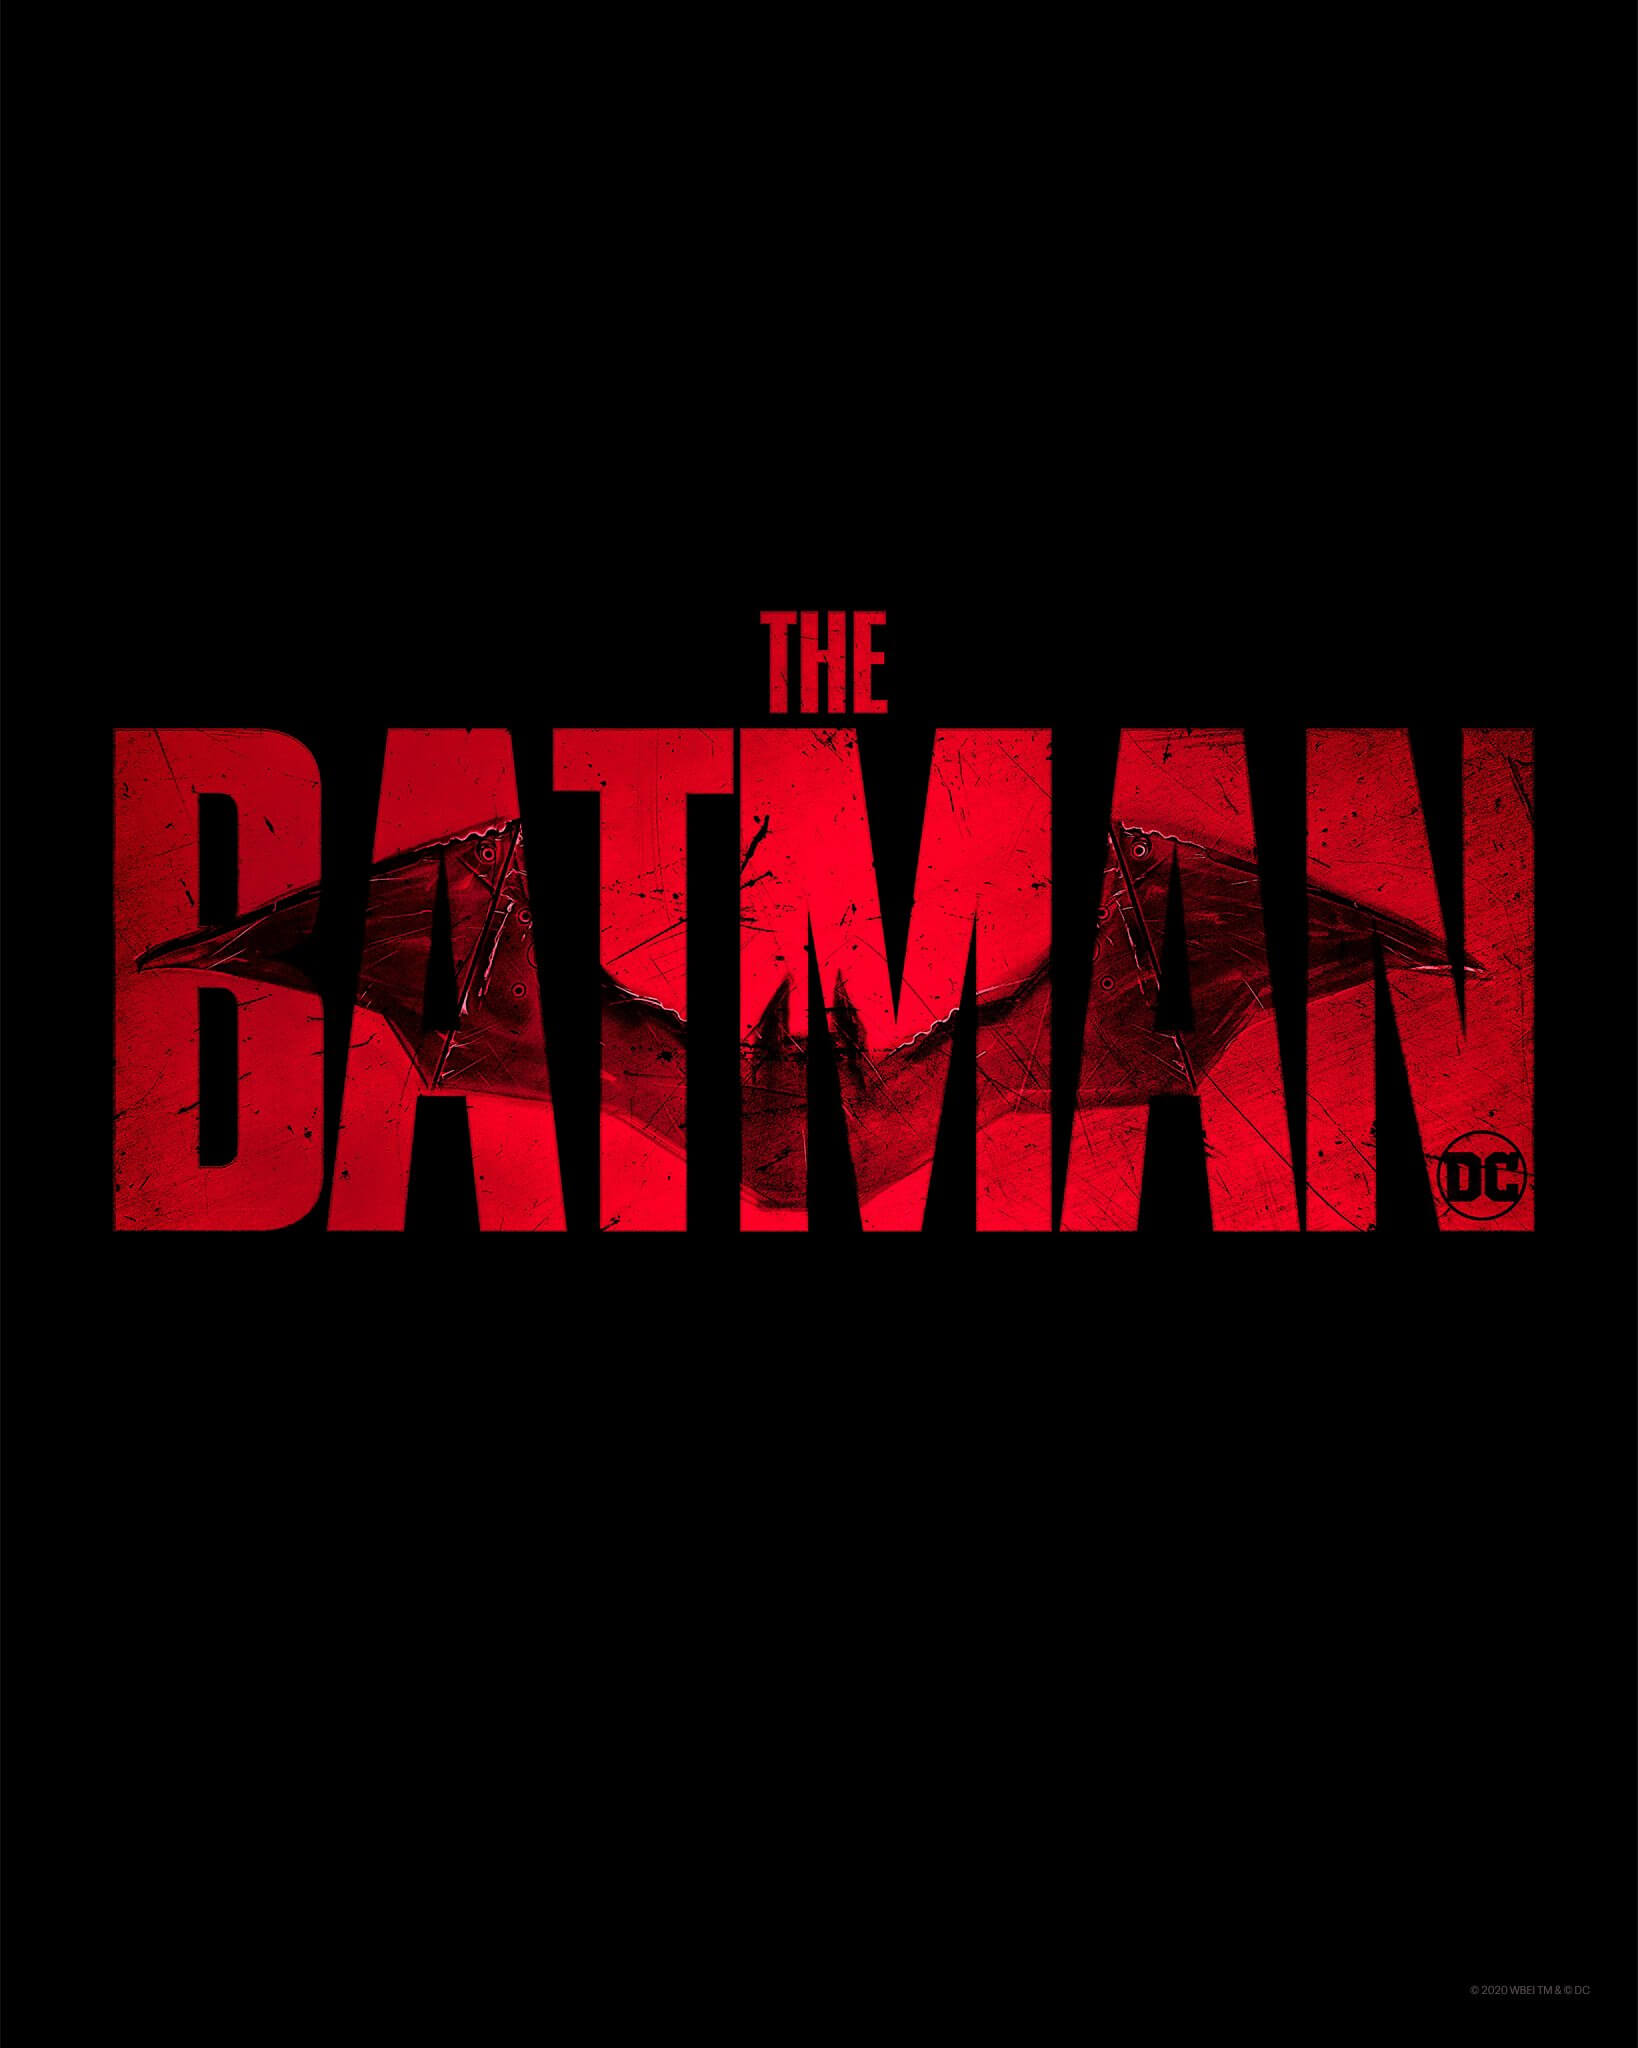 TheBatman